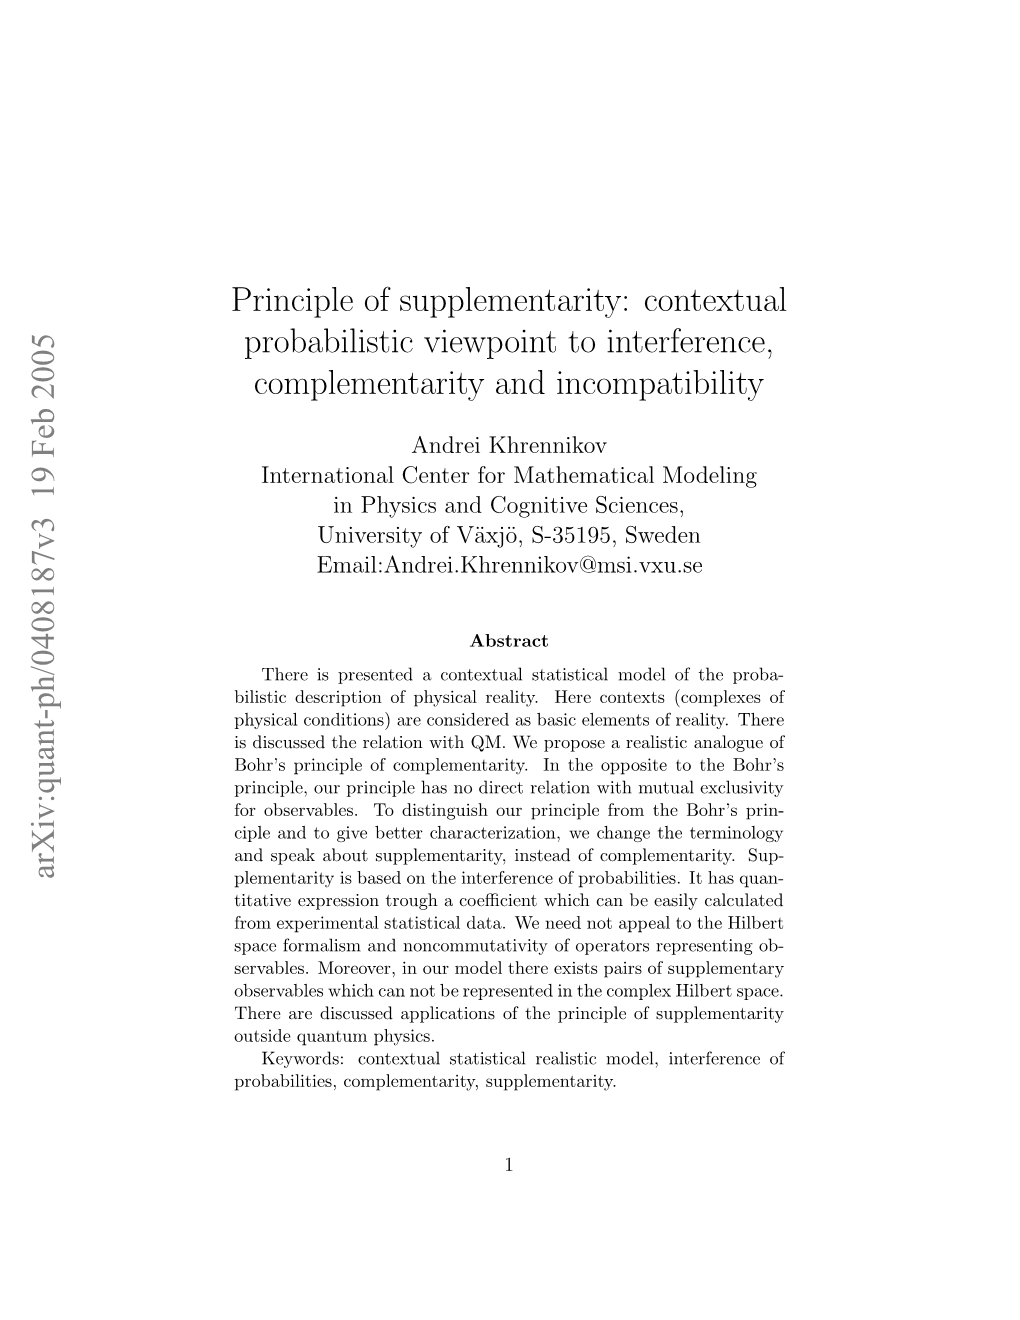 Principle of Supplementarity: Contextual Probabilistic Viewpoint To